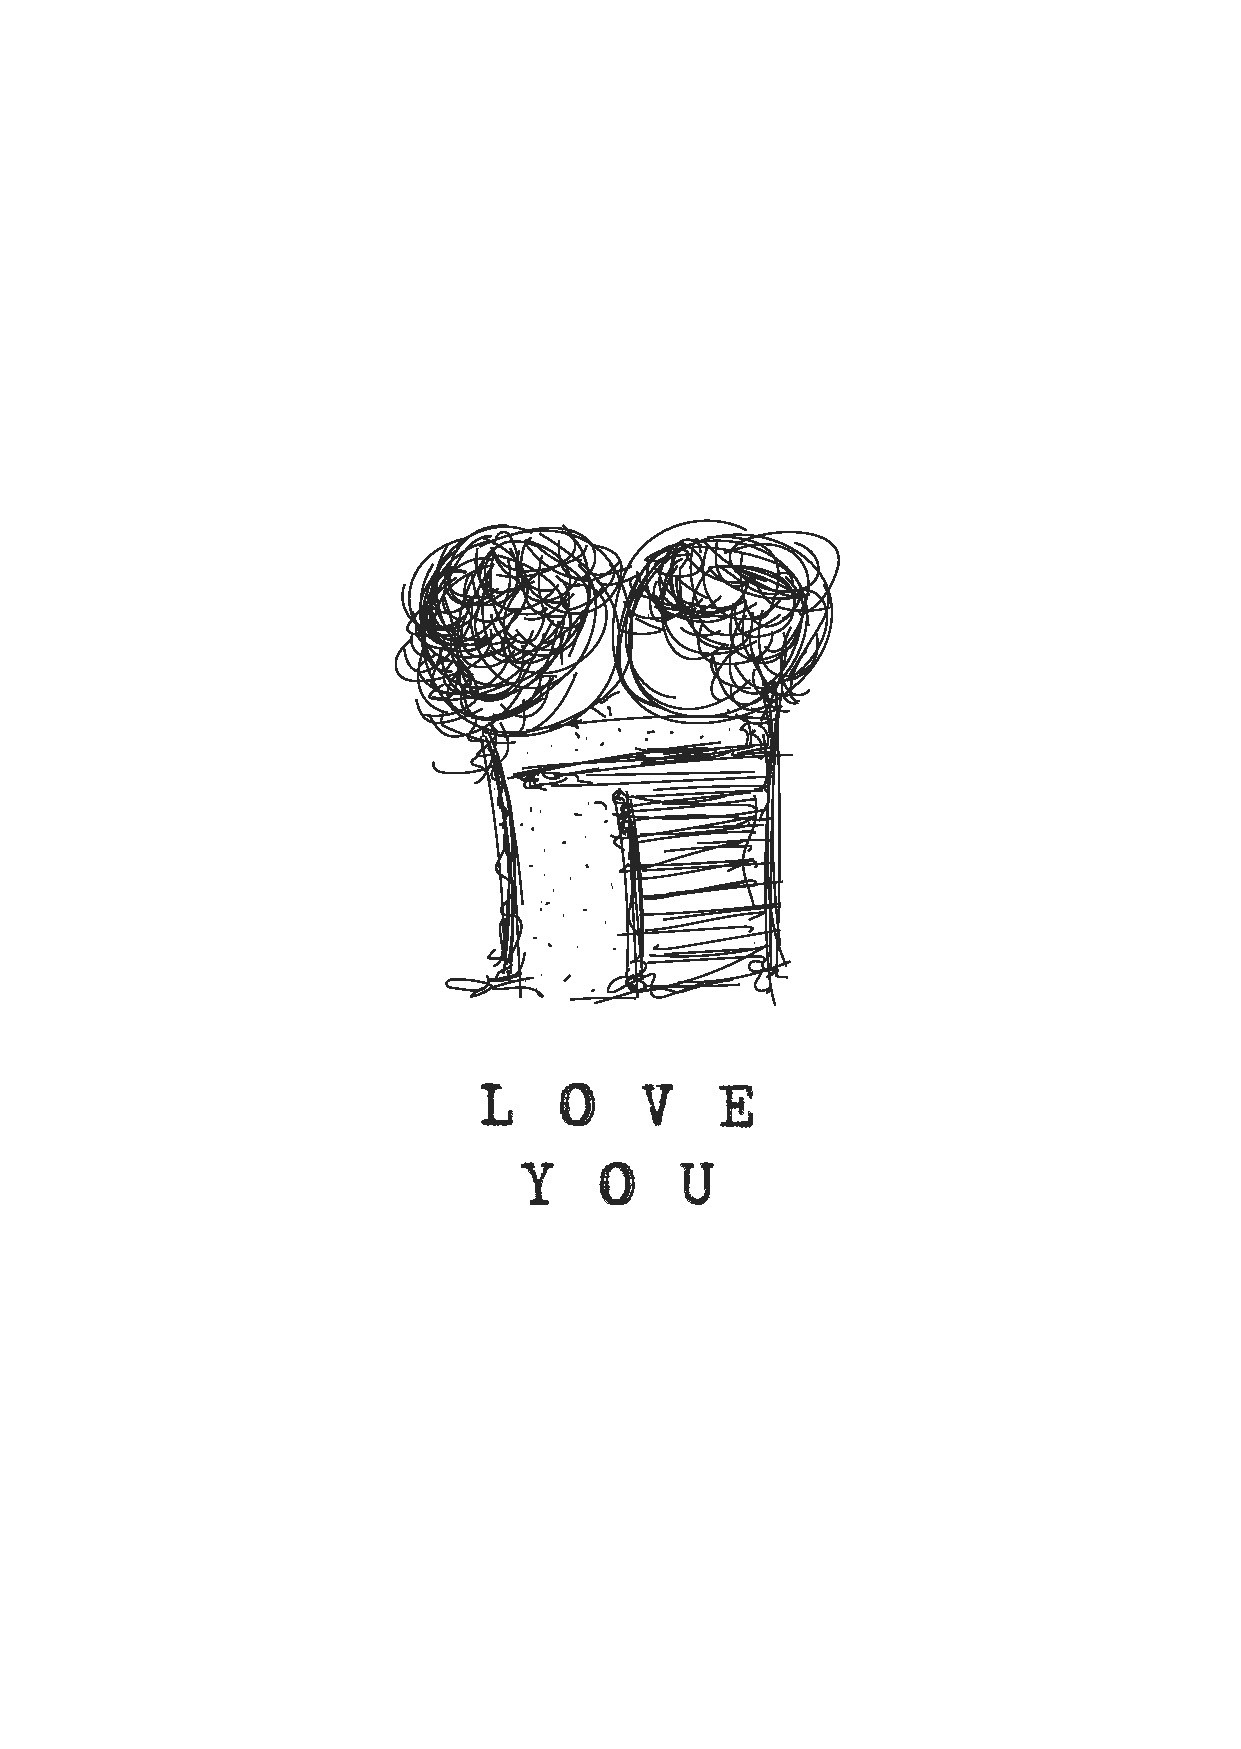 Wenskaart 'Love you' - MA44010 -  LUV2022 bij MajesticAlly